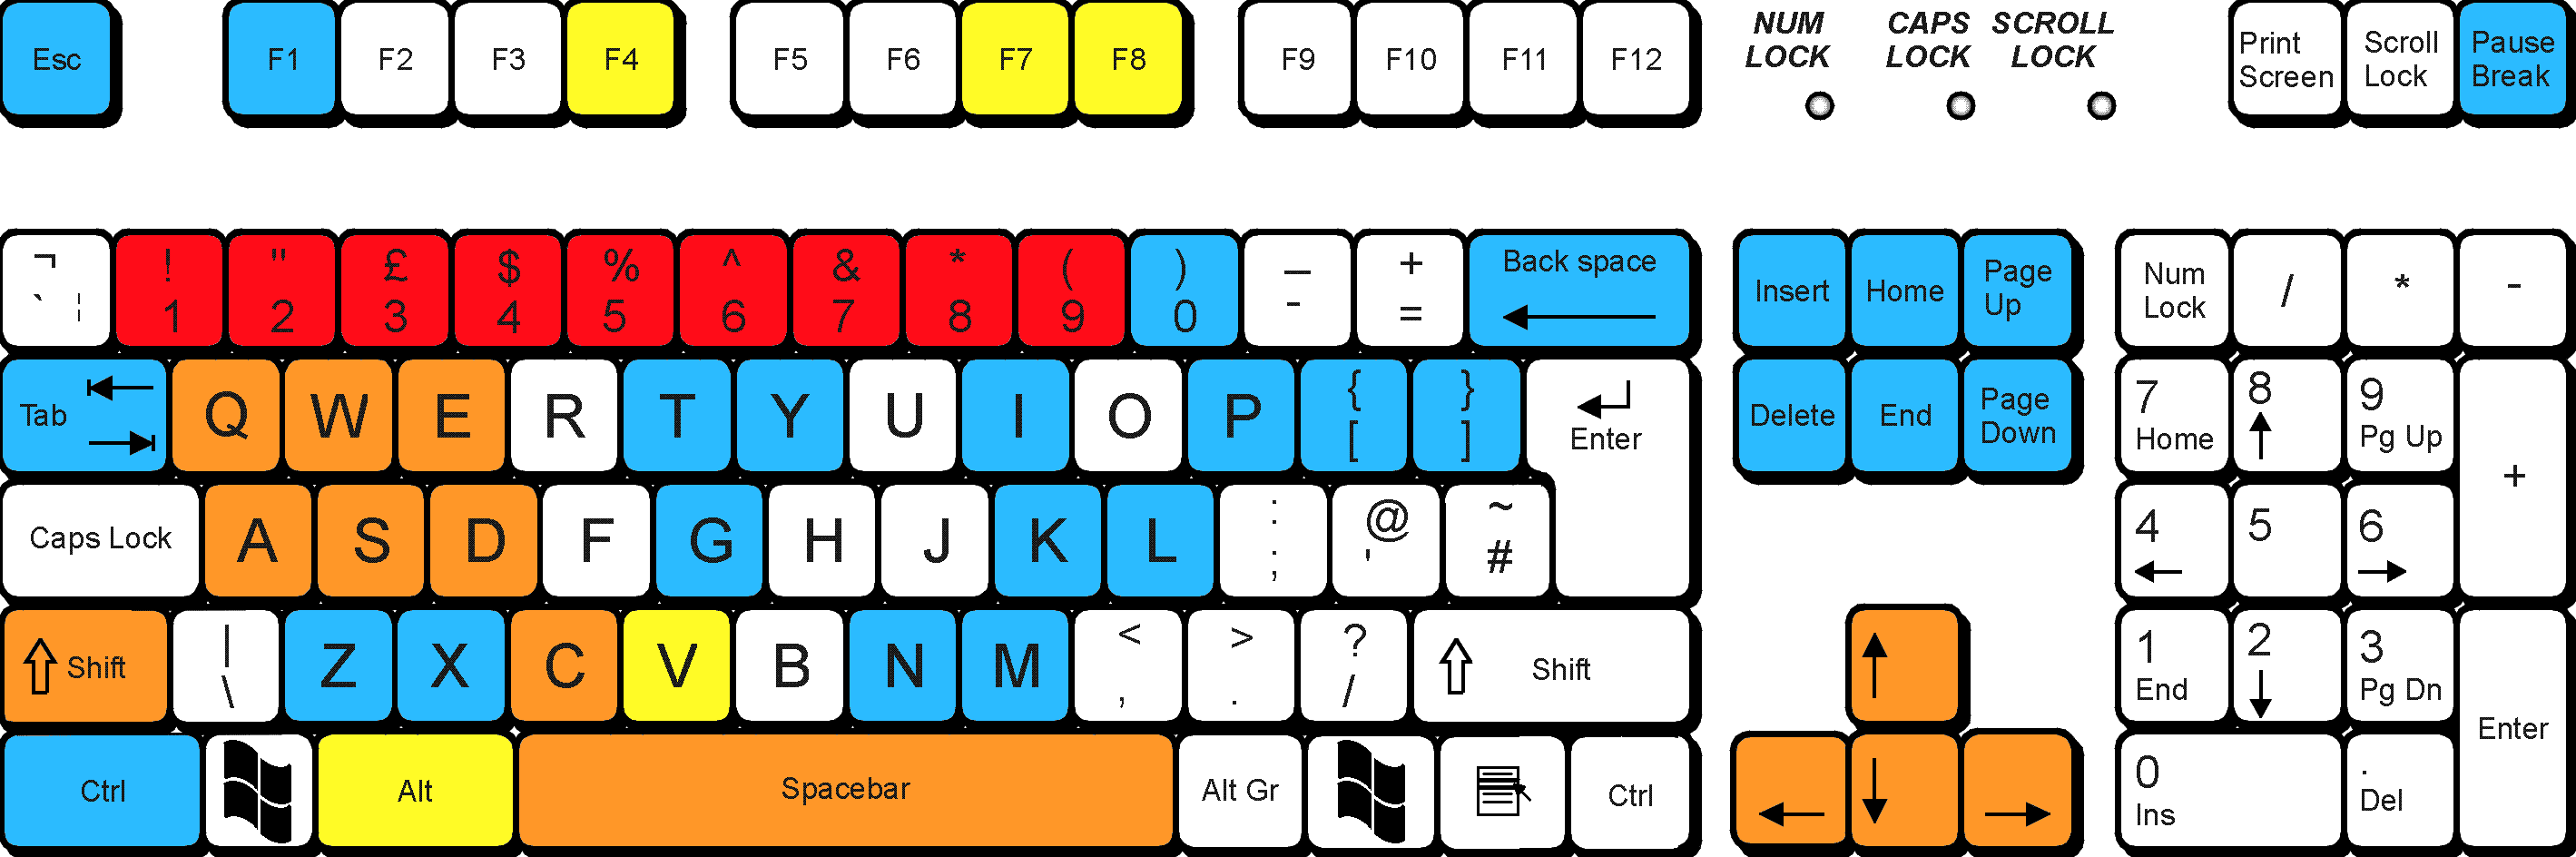 ctrl paint keyboard shortcuts using motion